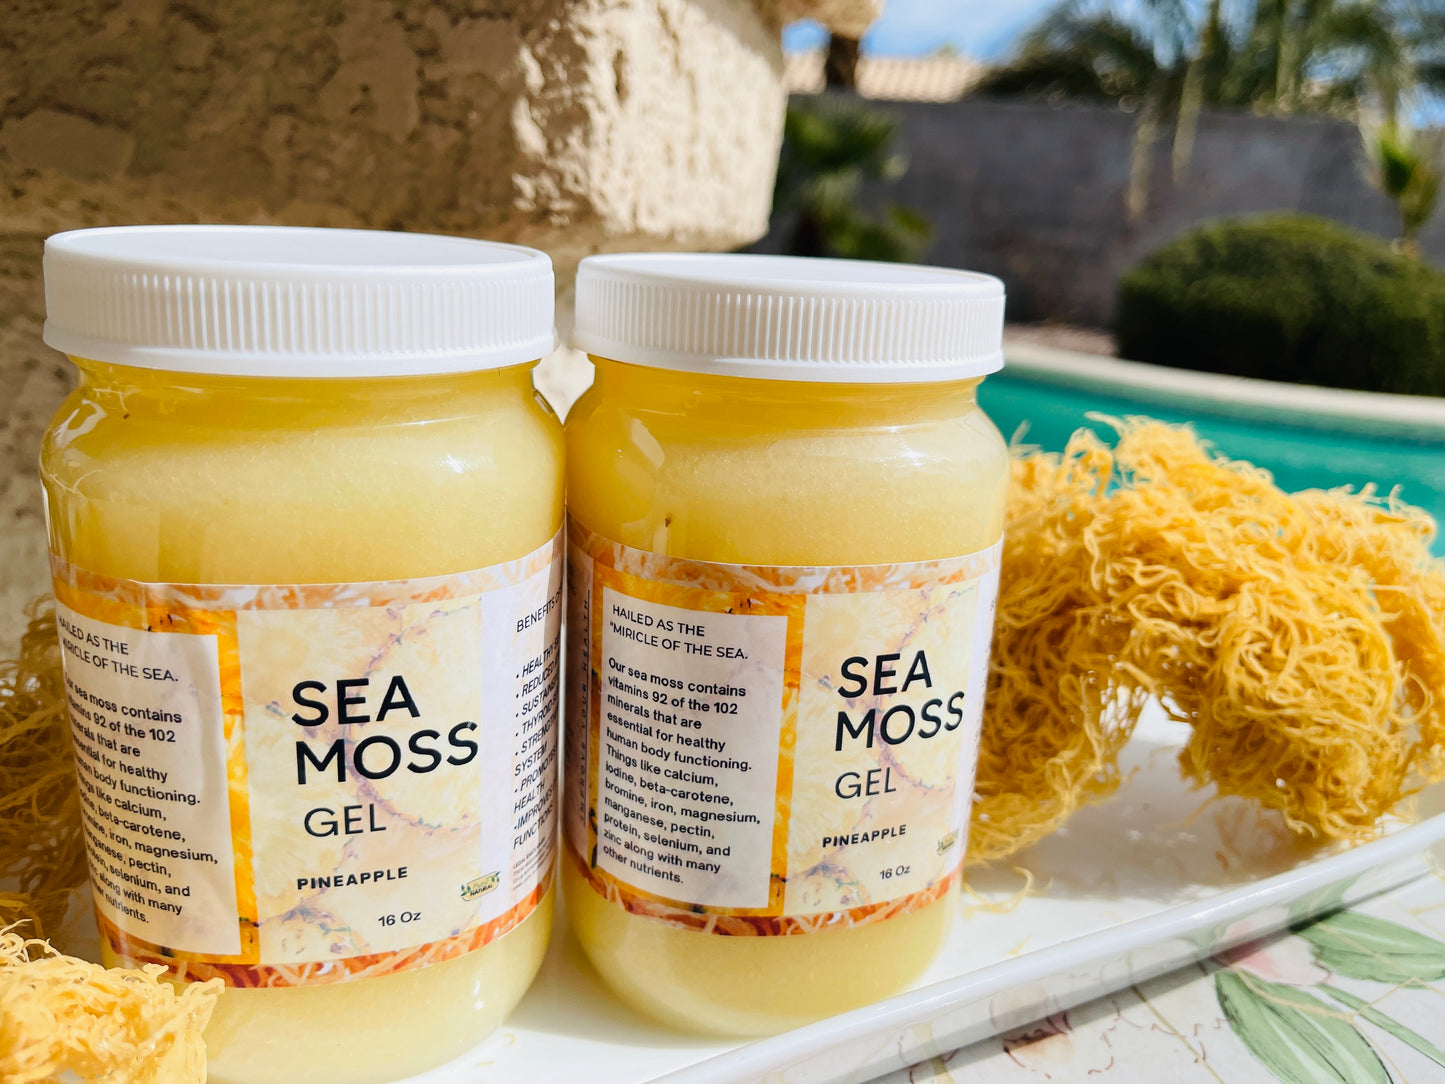 Sea Moss Gel Pineapple Flavored | 100% Natural Organic | Helps Boost Immunity, Digestion, Metabolism | Pineapple Sea Moss Gel - 16Oz